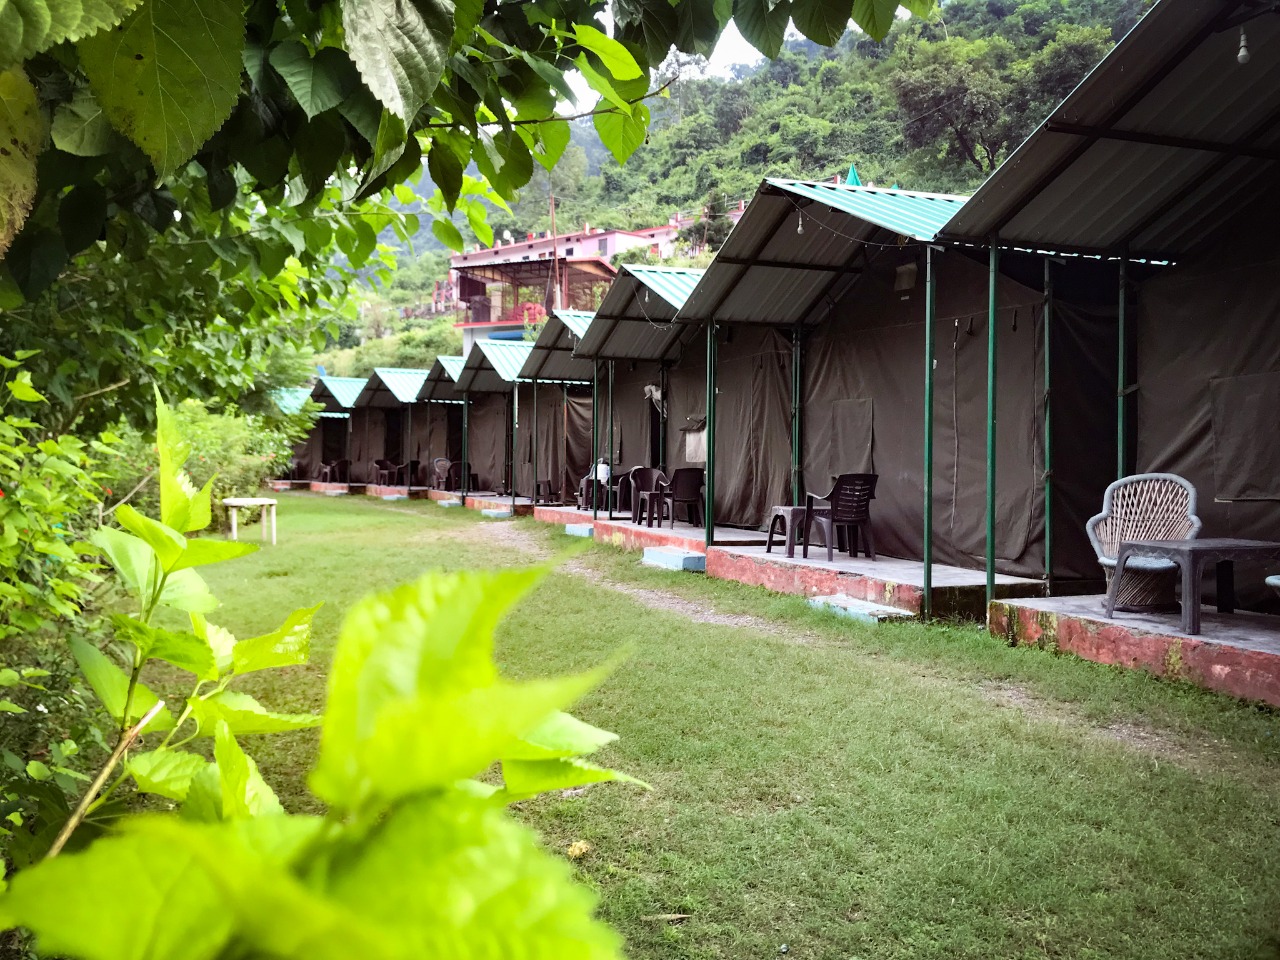 Camp Badal Advenutre, Rishikesh Photo - 5